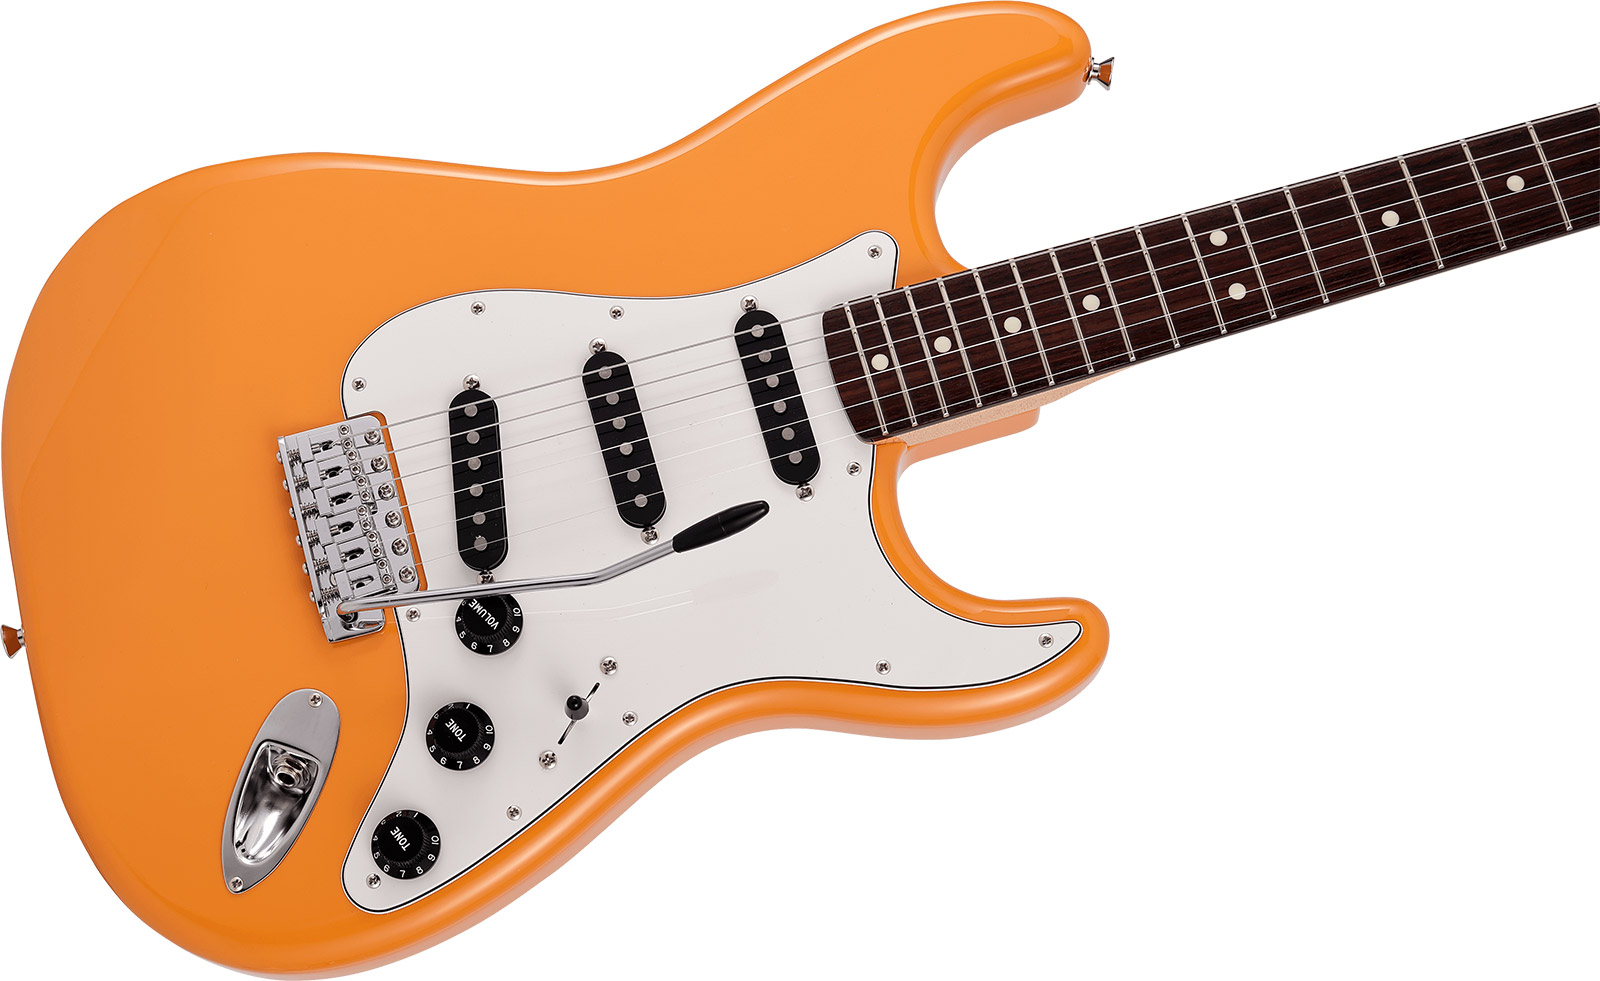 Fender Strat International Color Ltd Jap 3s Trem Rw - Capri Orange - Guitare Électrique Forme Str - Variation 2